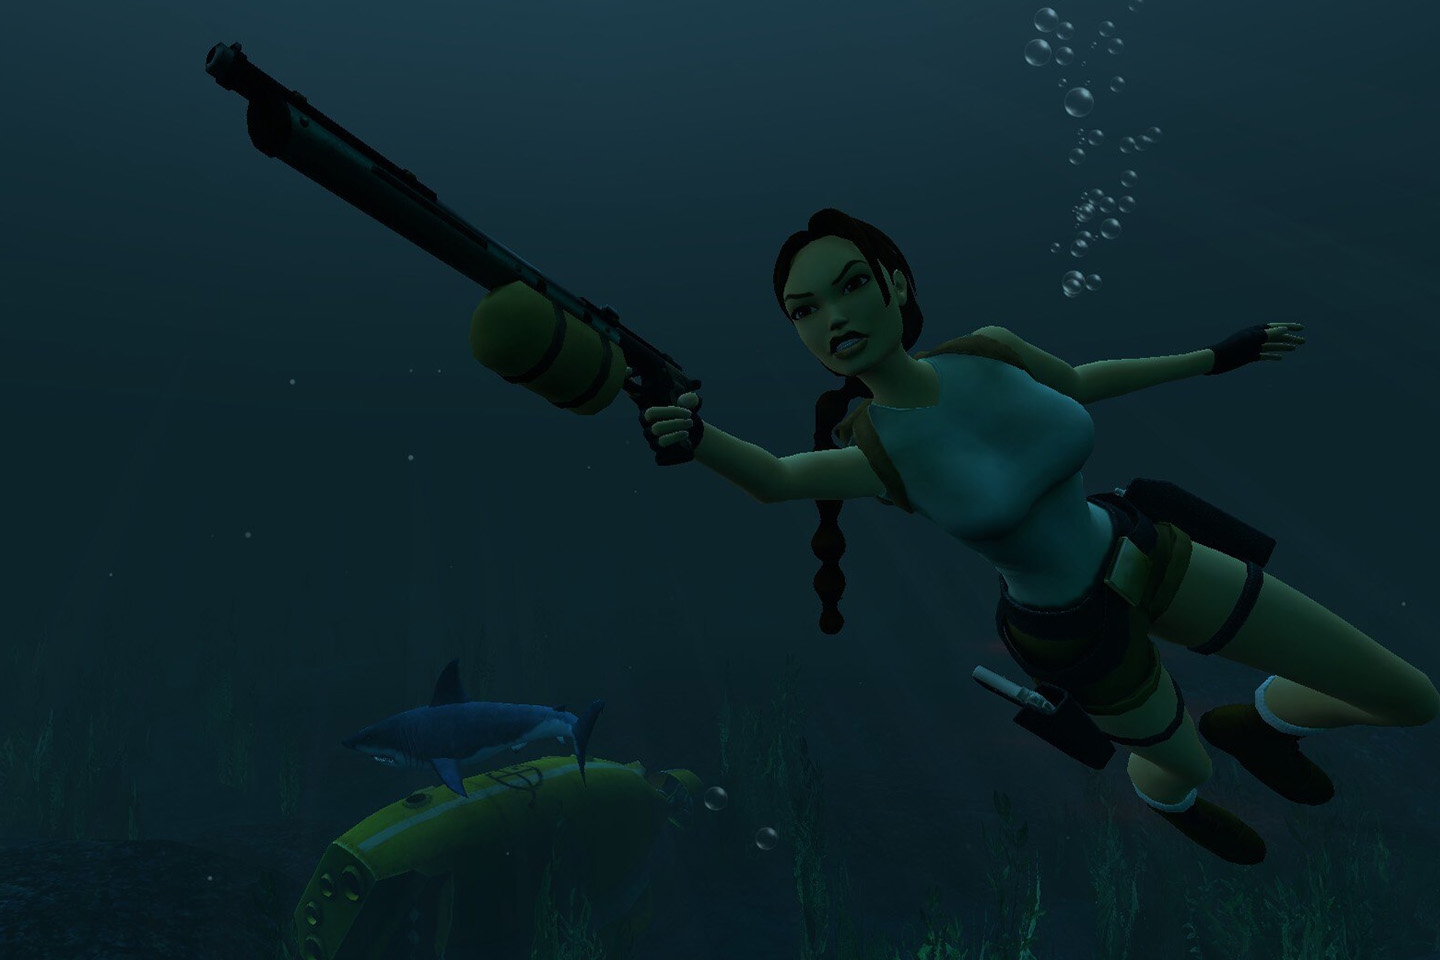 A Photo Mode screenshot of Lara Croft swimming near a shark in Tomb Raider I-III Remastered.